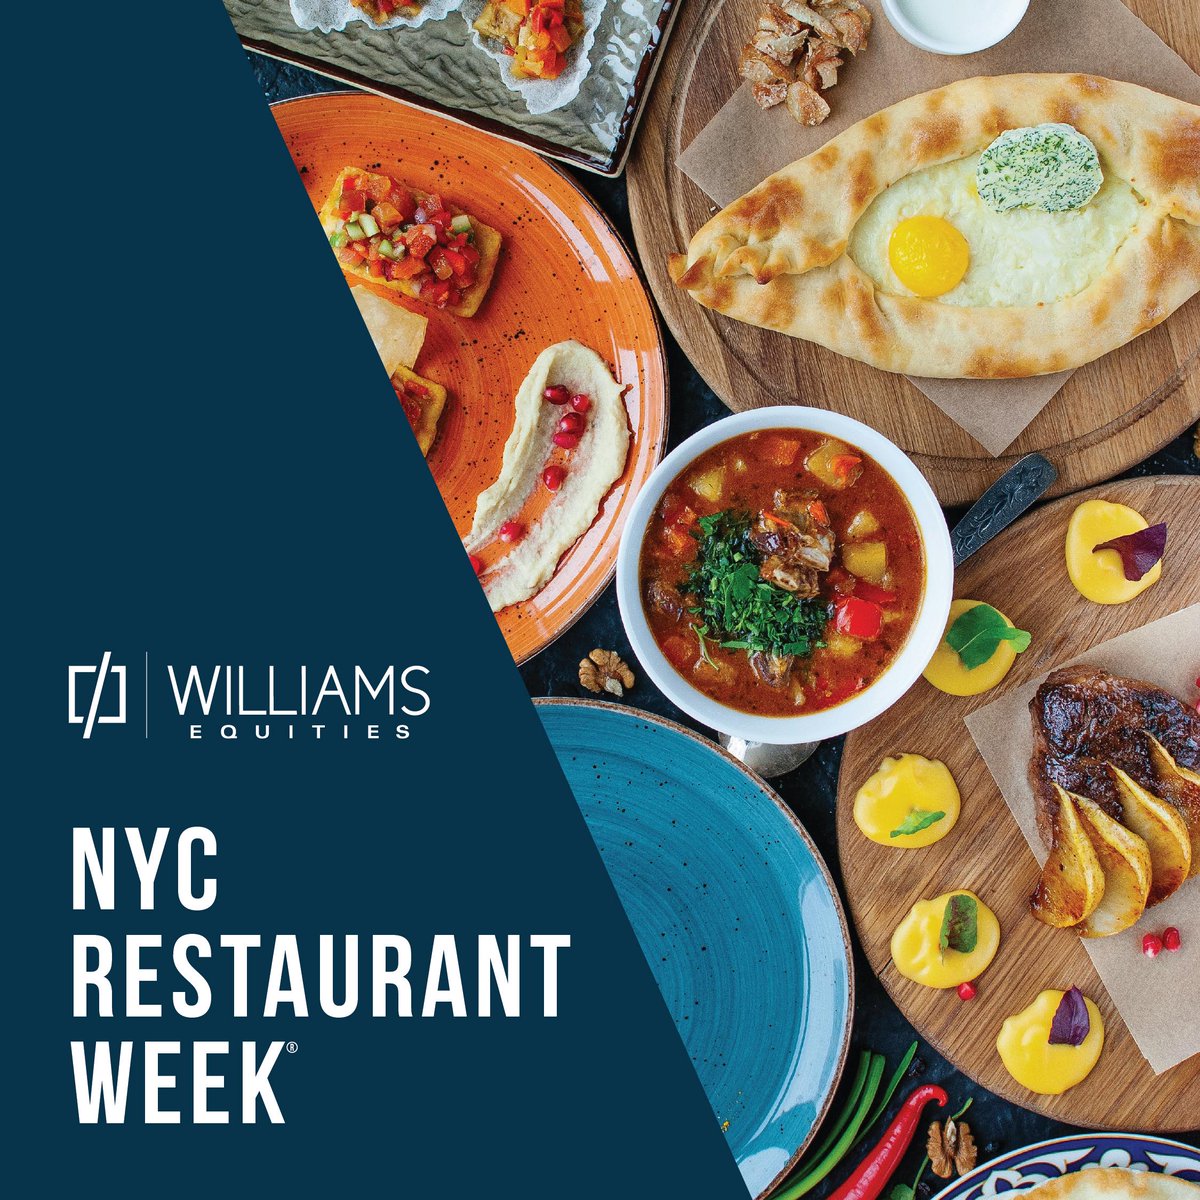 Mark your calendars New Yorkers! #NYCRestaurantWeek is set to begin July 24th! >> nycgo.com/restaurant-week

#WEQ #NYCRestaurantWeek #NYCRestaurants #NewYork  #NYCFoodies #NYCEats #Foodie #RestaurantDeals #NYC